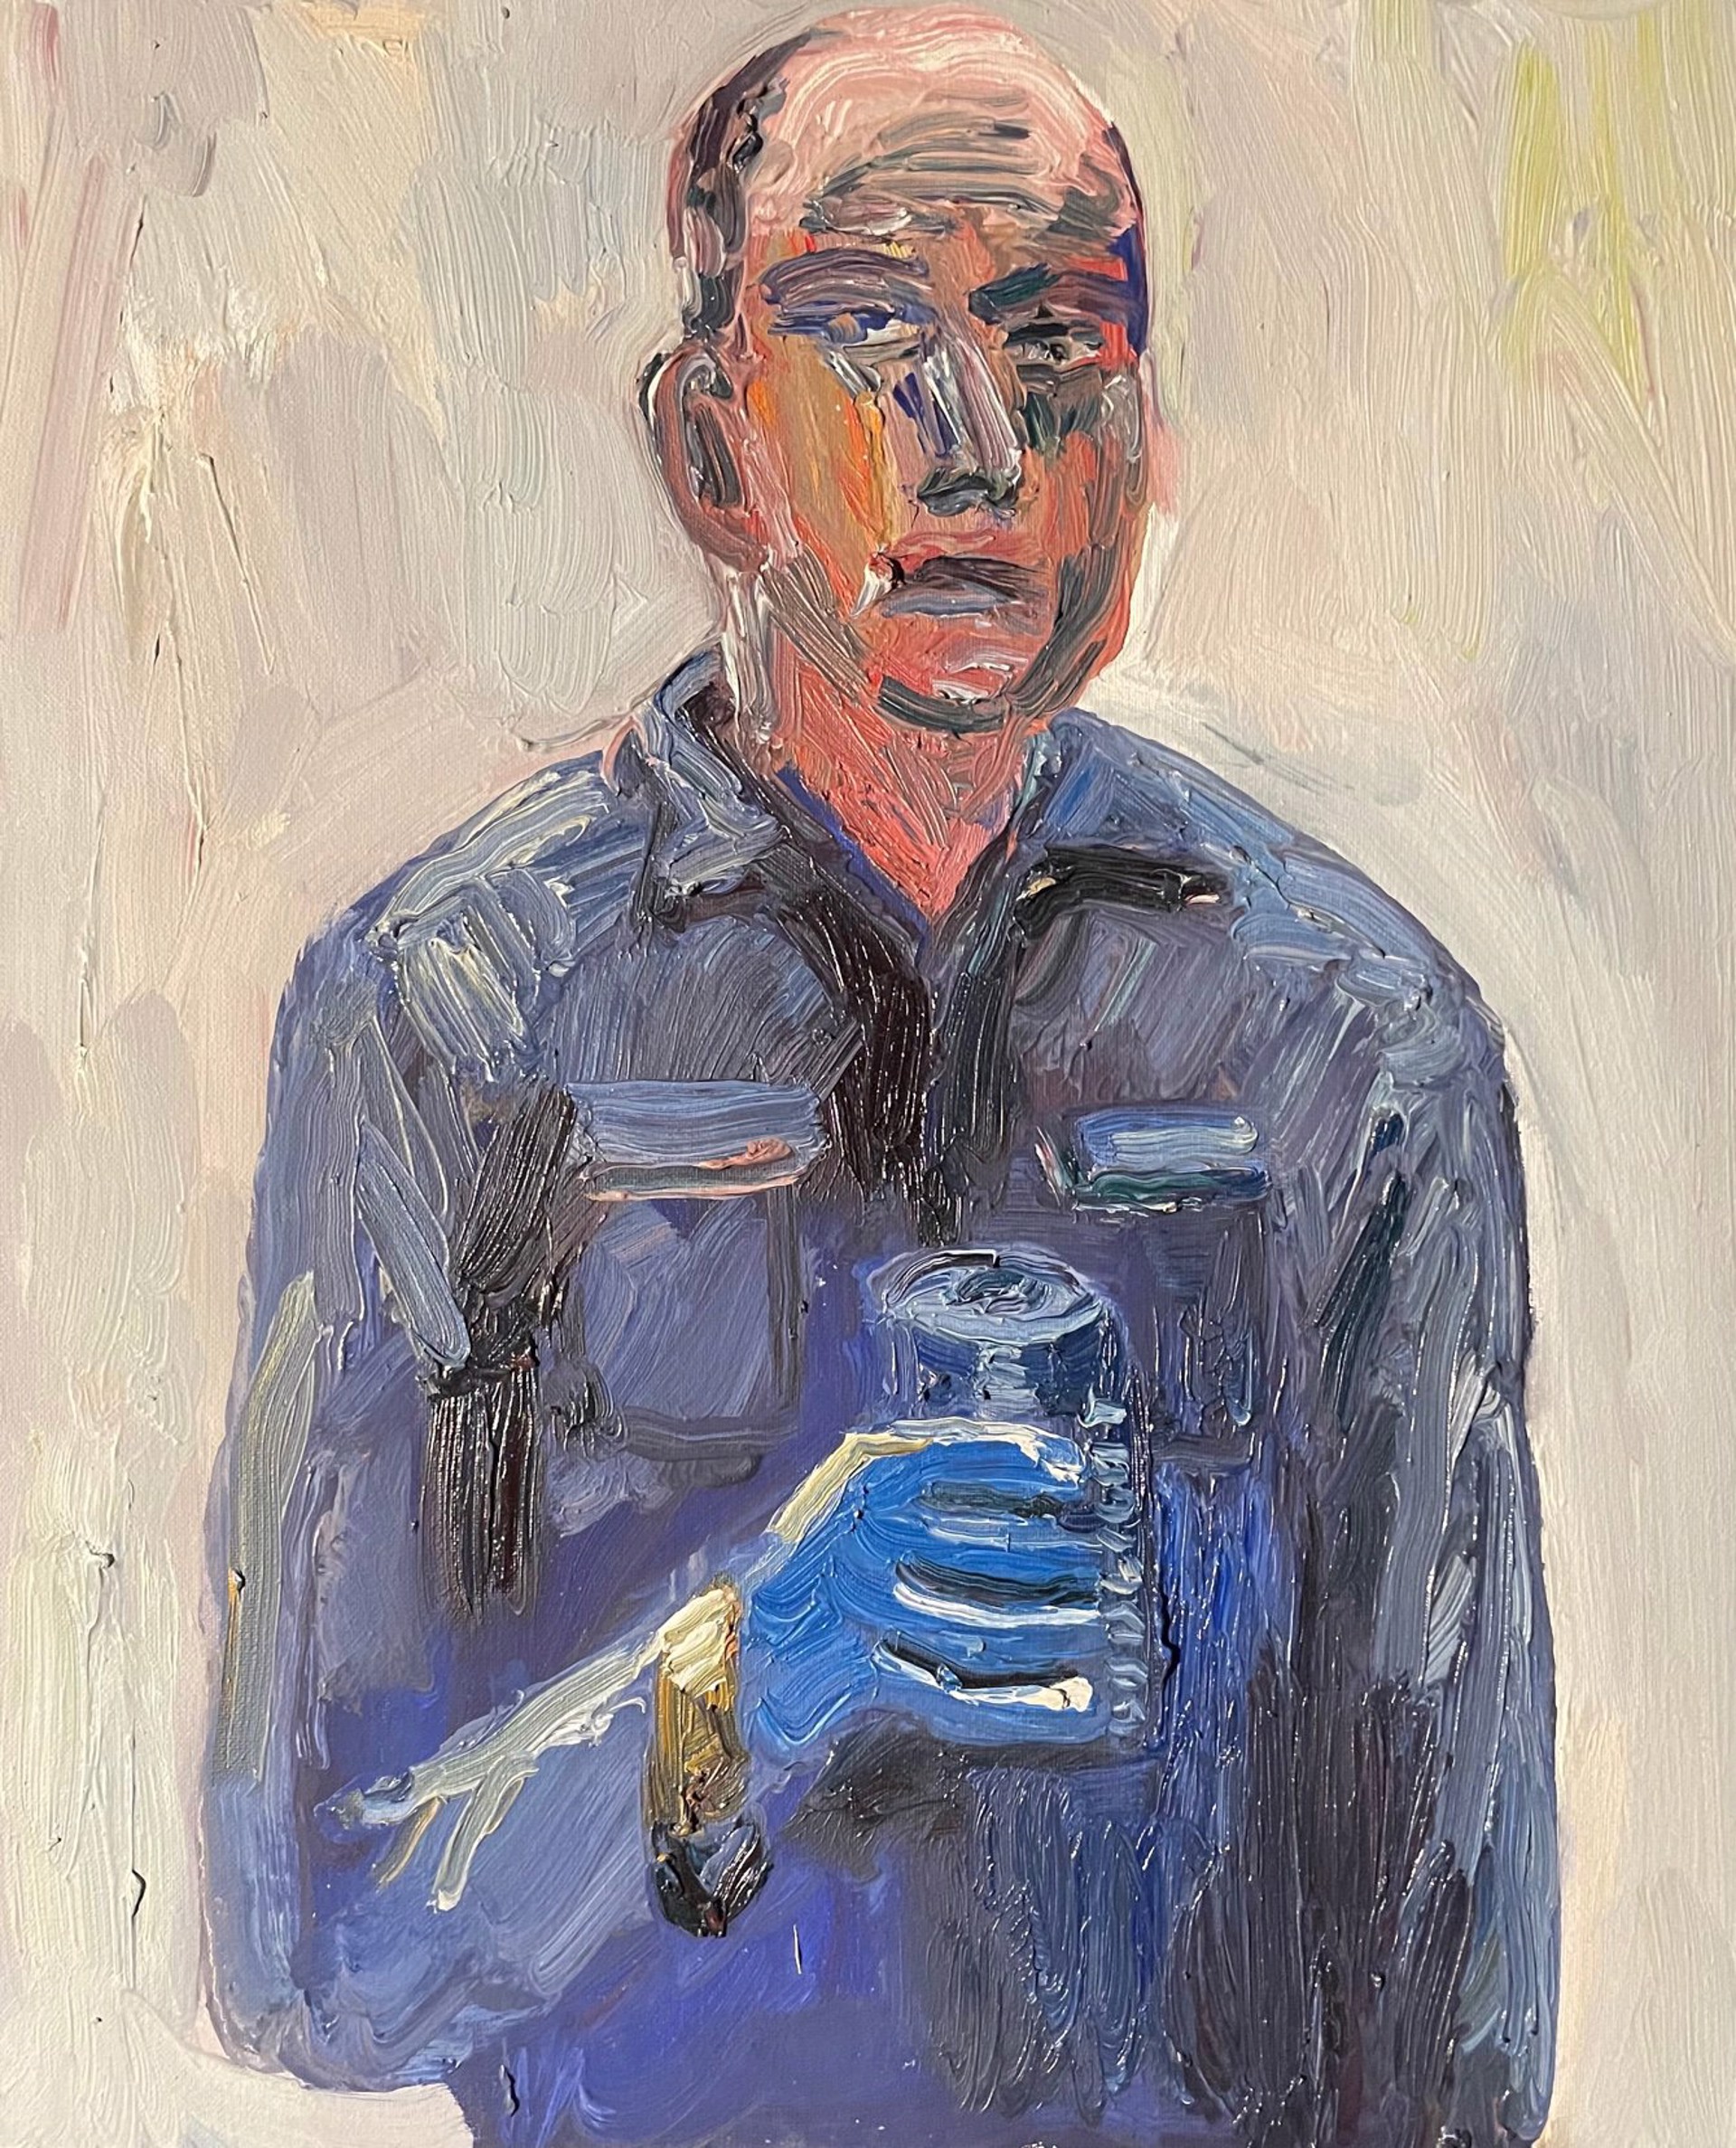 Self Portrait Wearing Blue Shirt, Blue Gloves, and Drinking a Blue Bud by John Kilduff